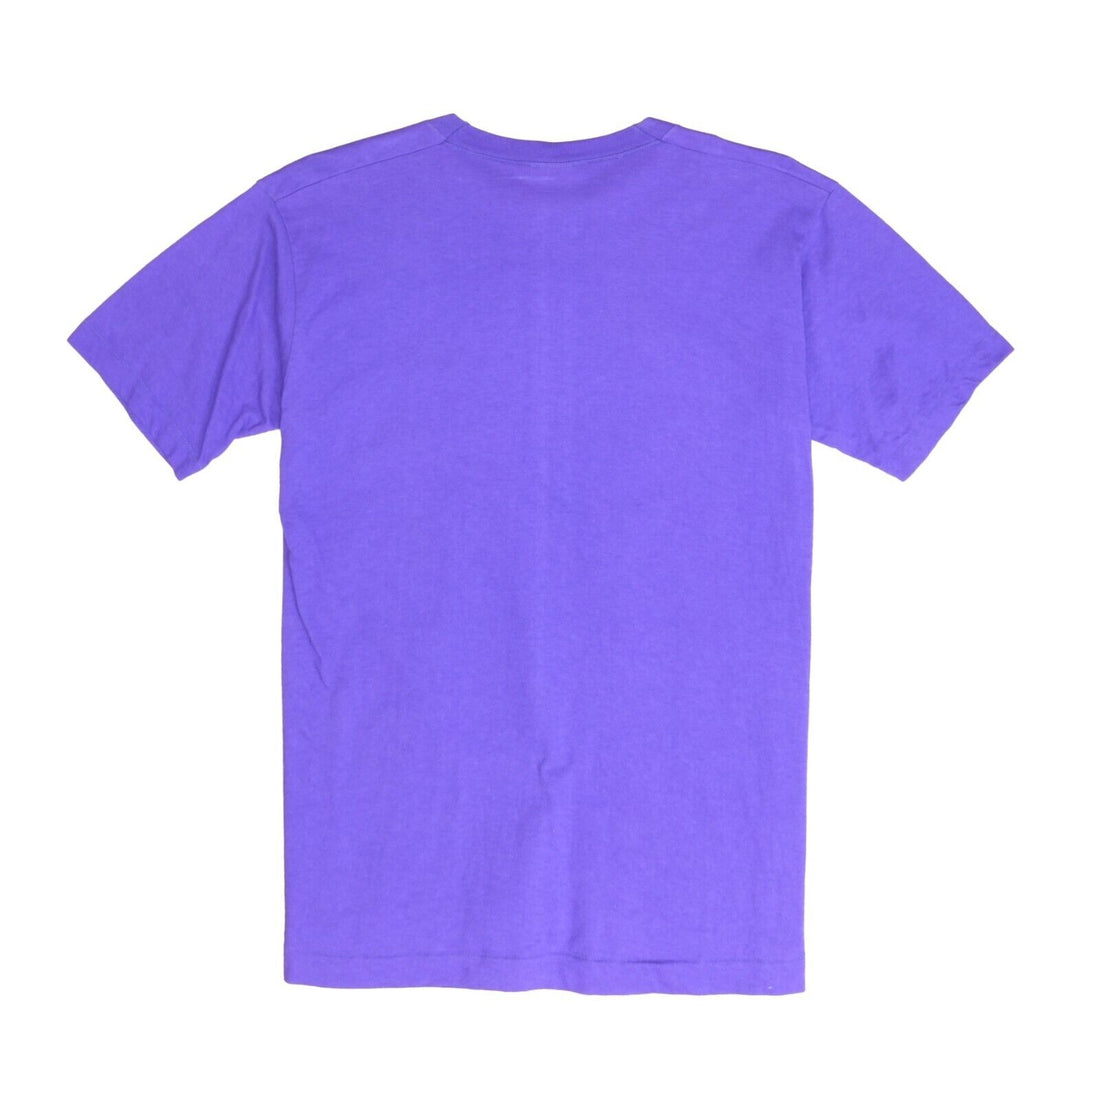 Vintage Toronto Raptors Ravens T-Shirt Size Medium Purple 1994 90s NBA